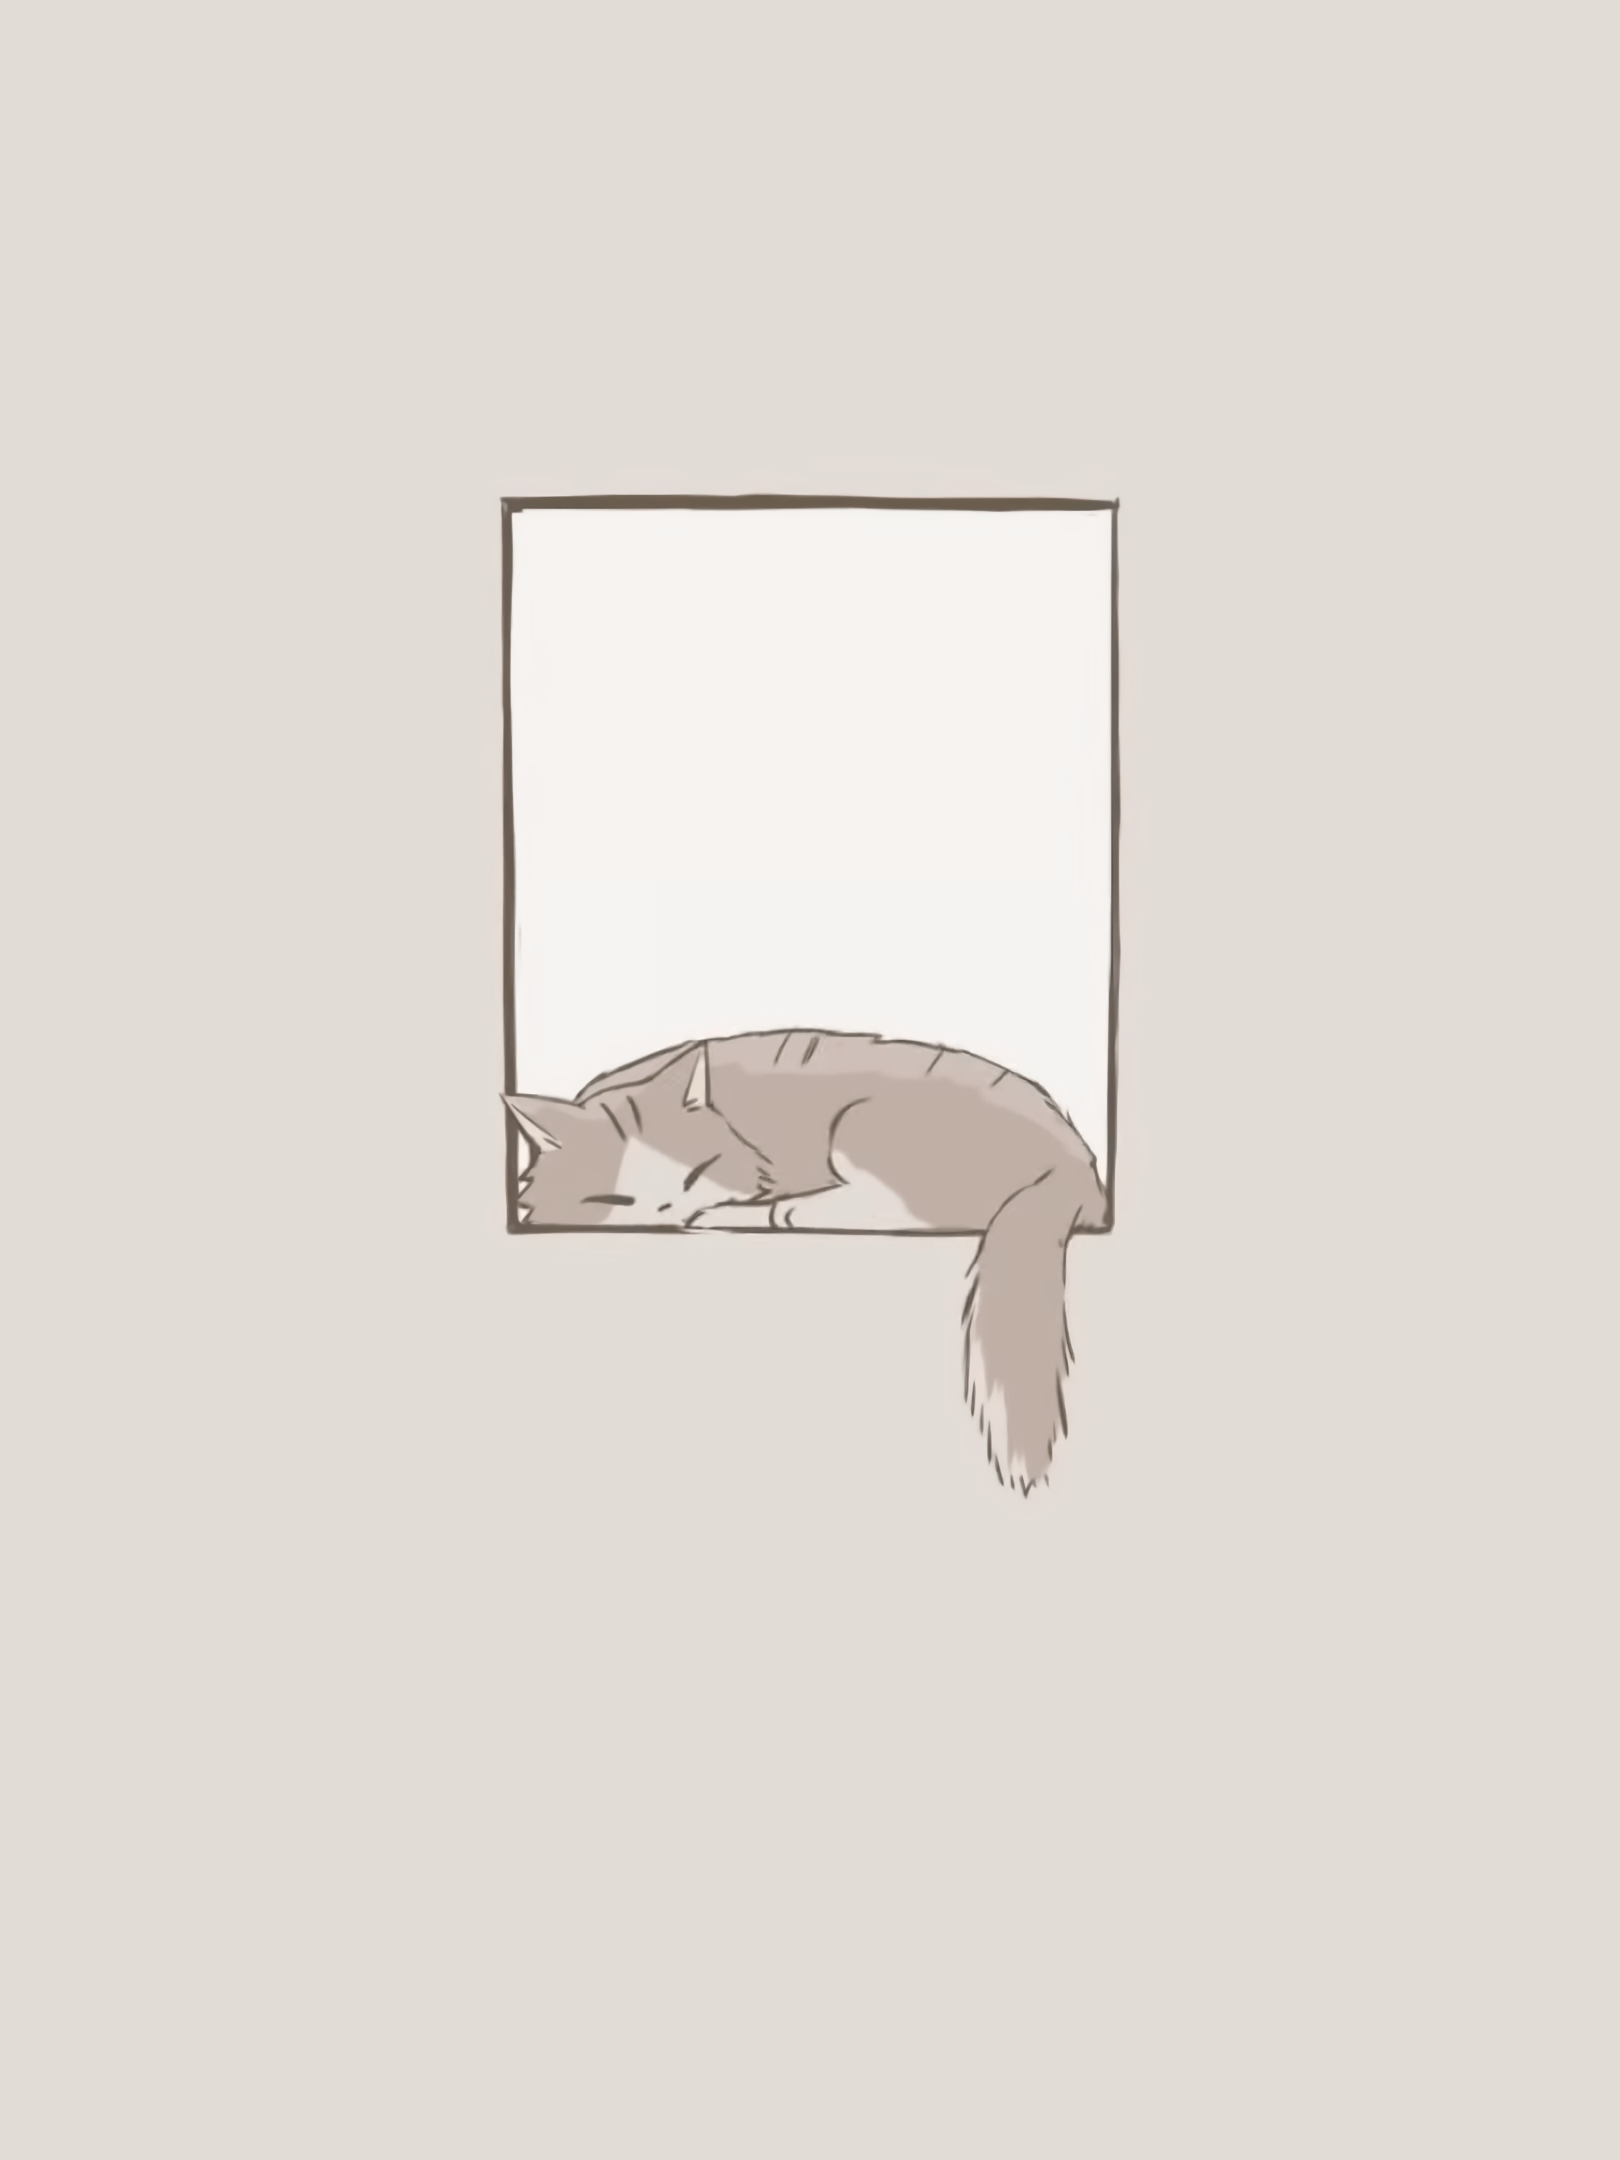 A cat sleeping in the window - Phone